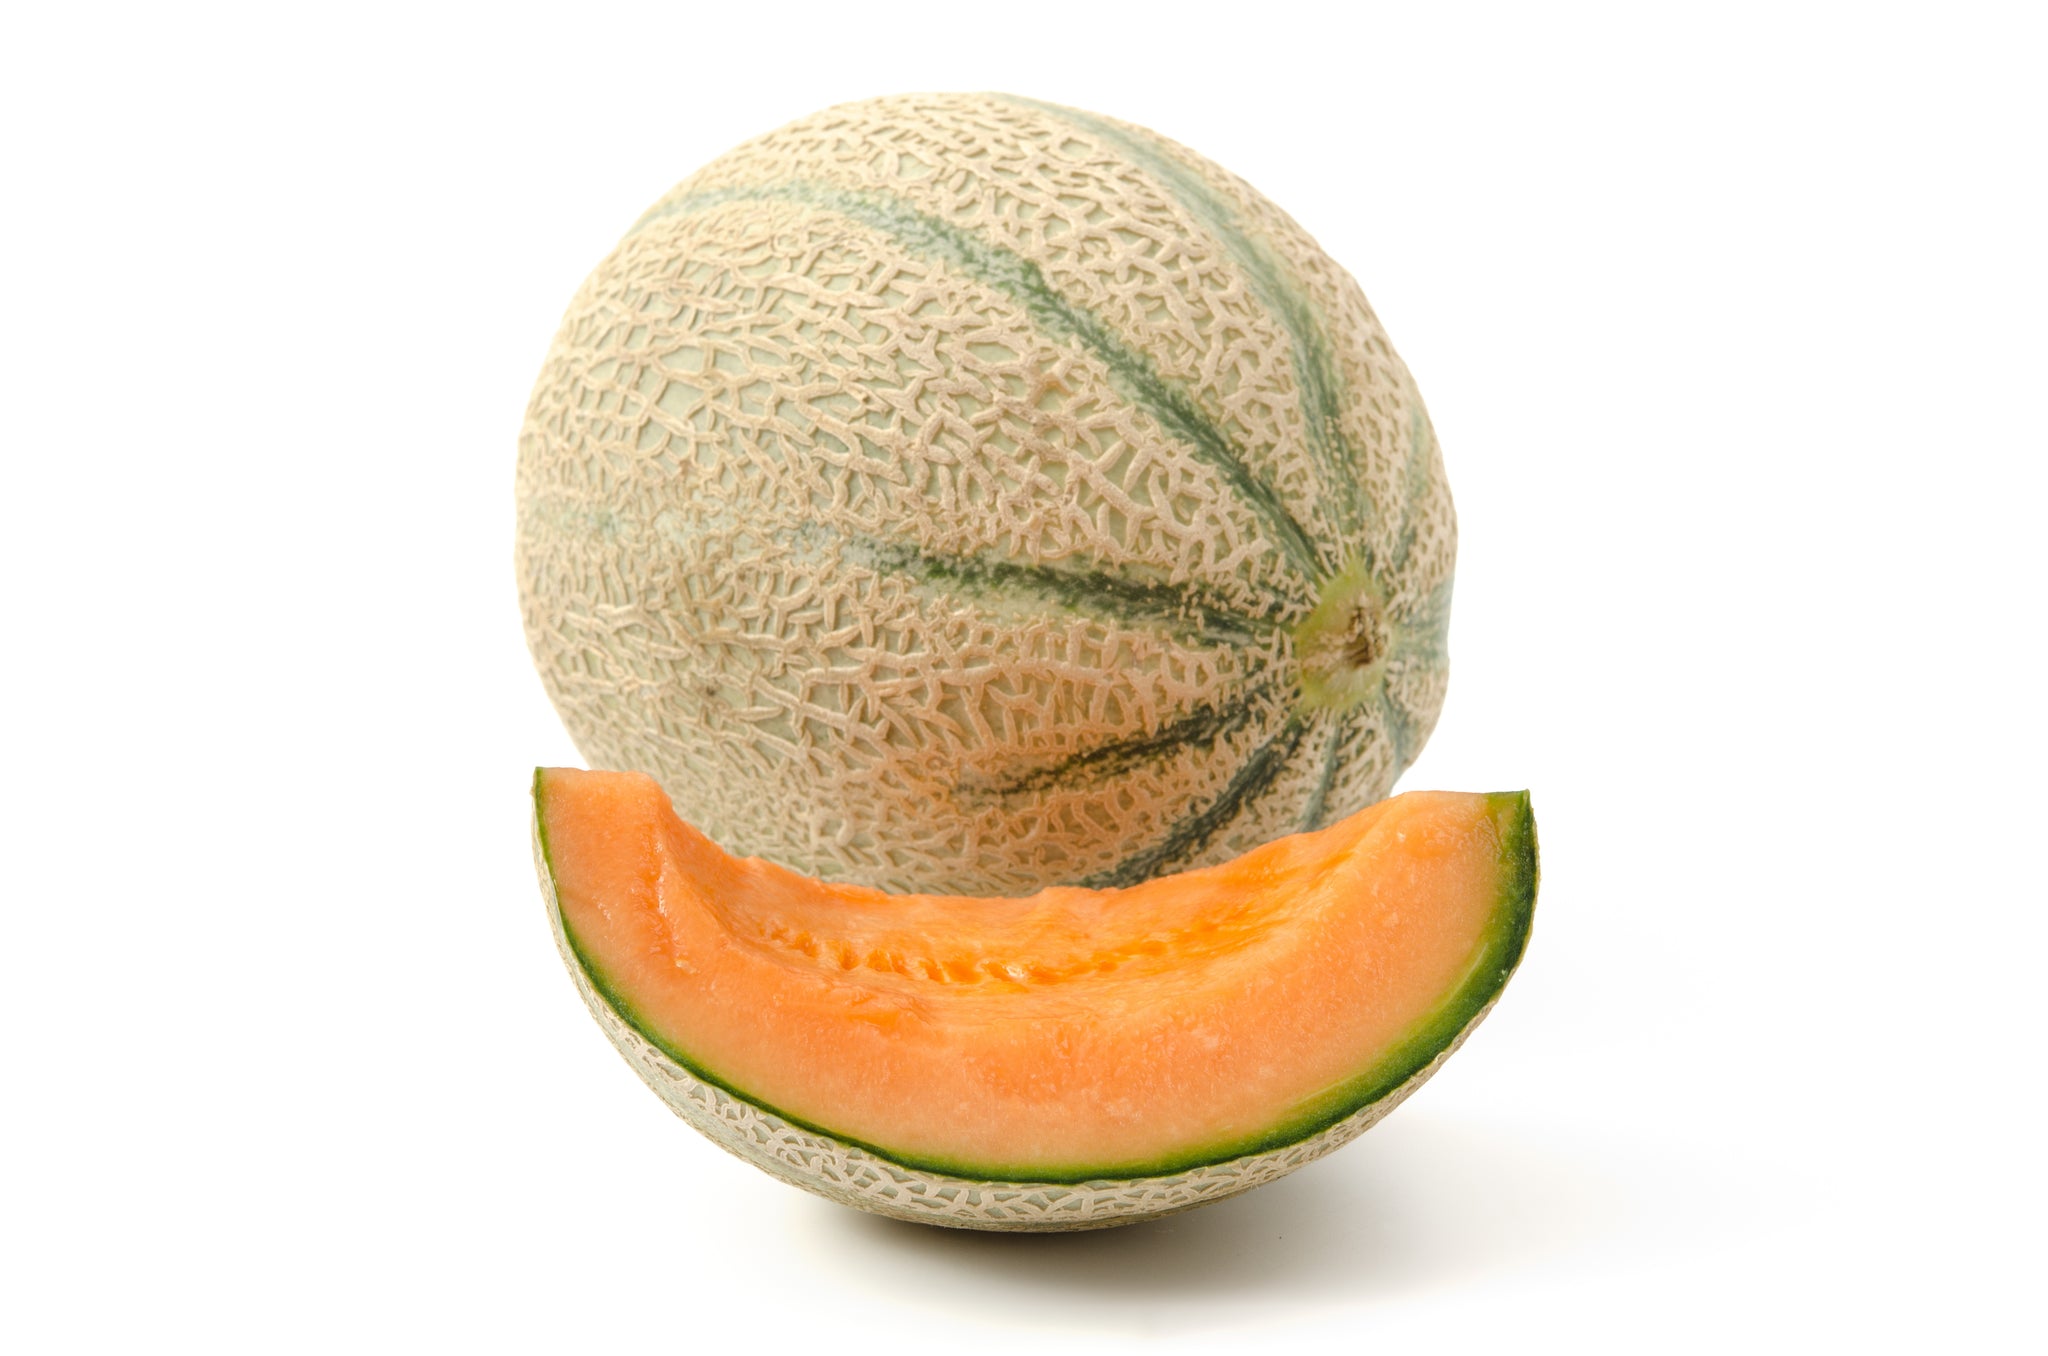 stl>Cantelope Melon (1 Whole Melon)